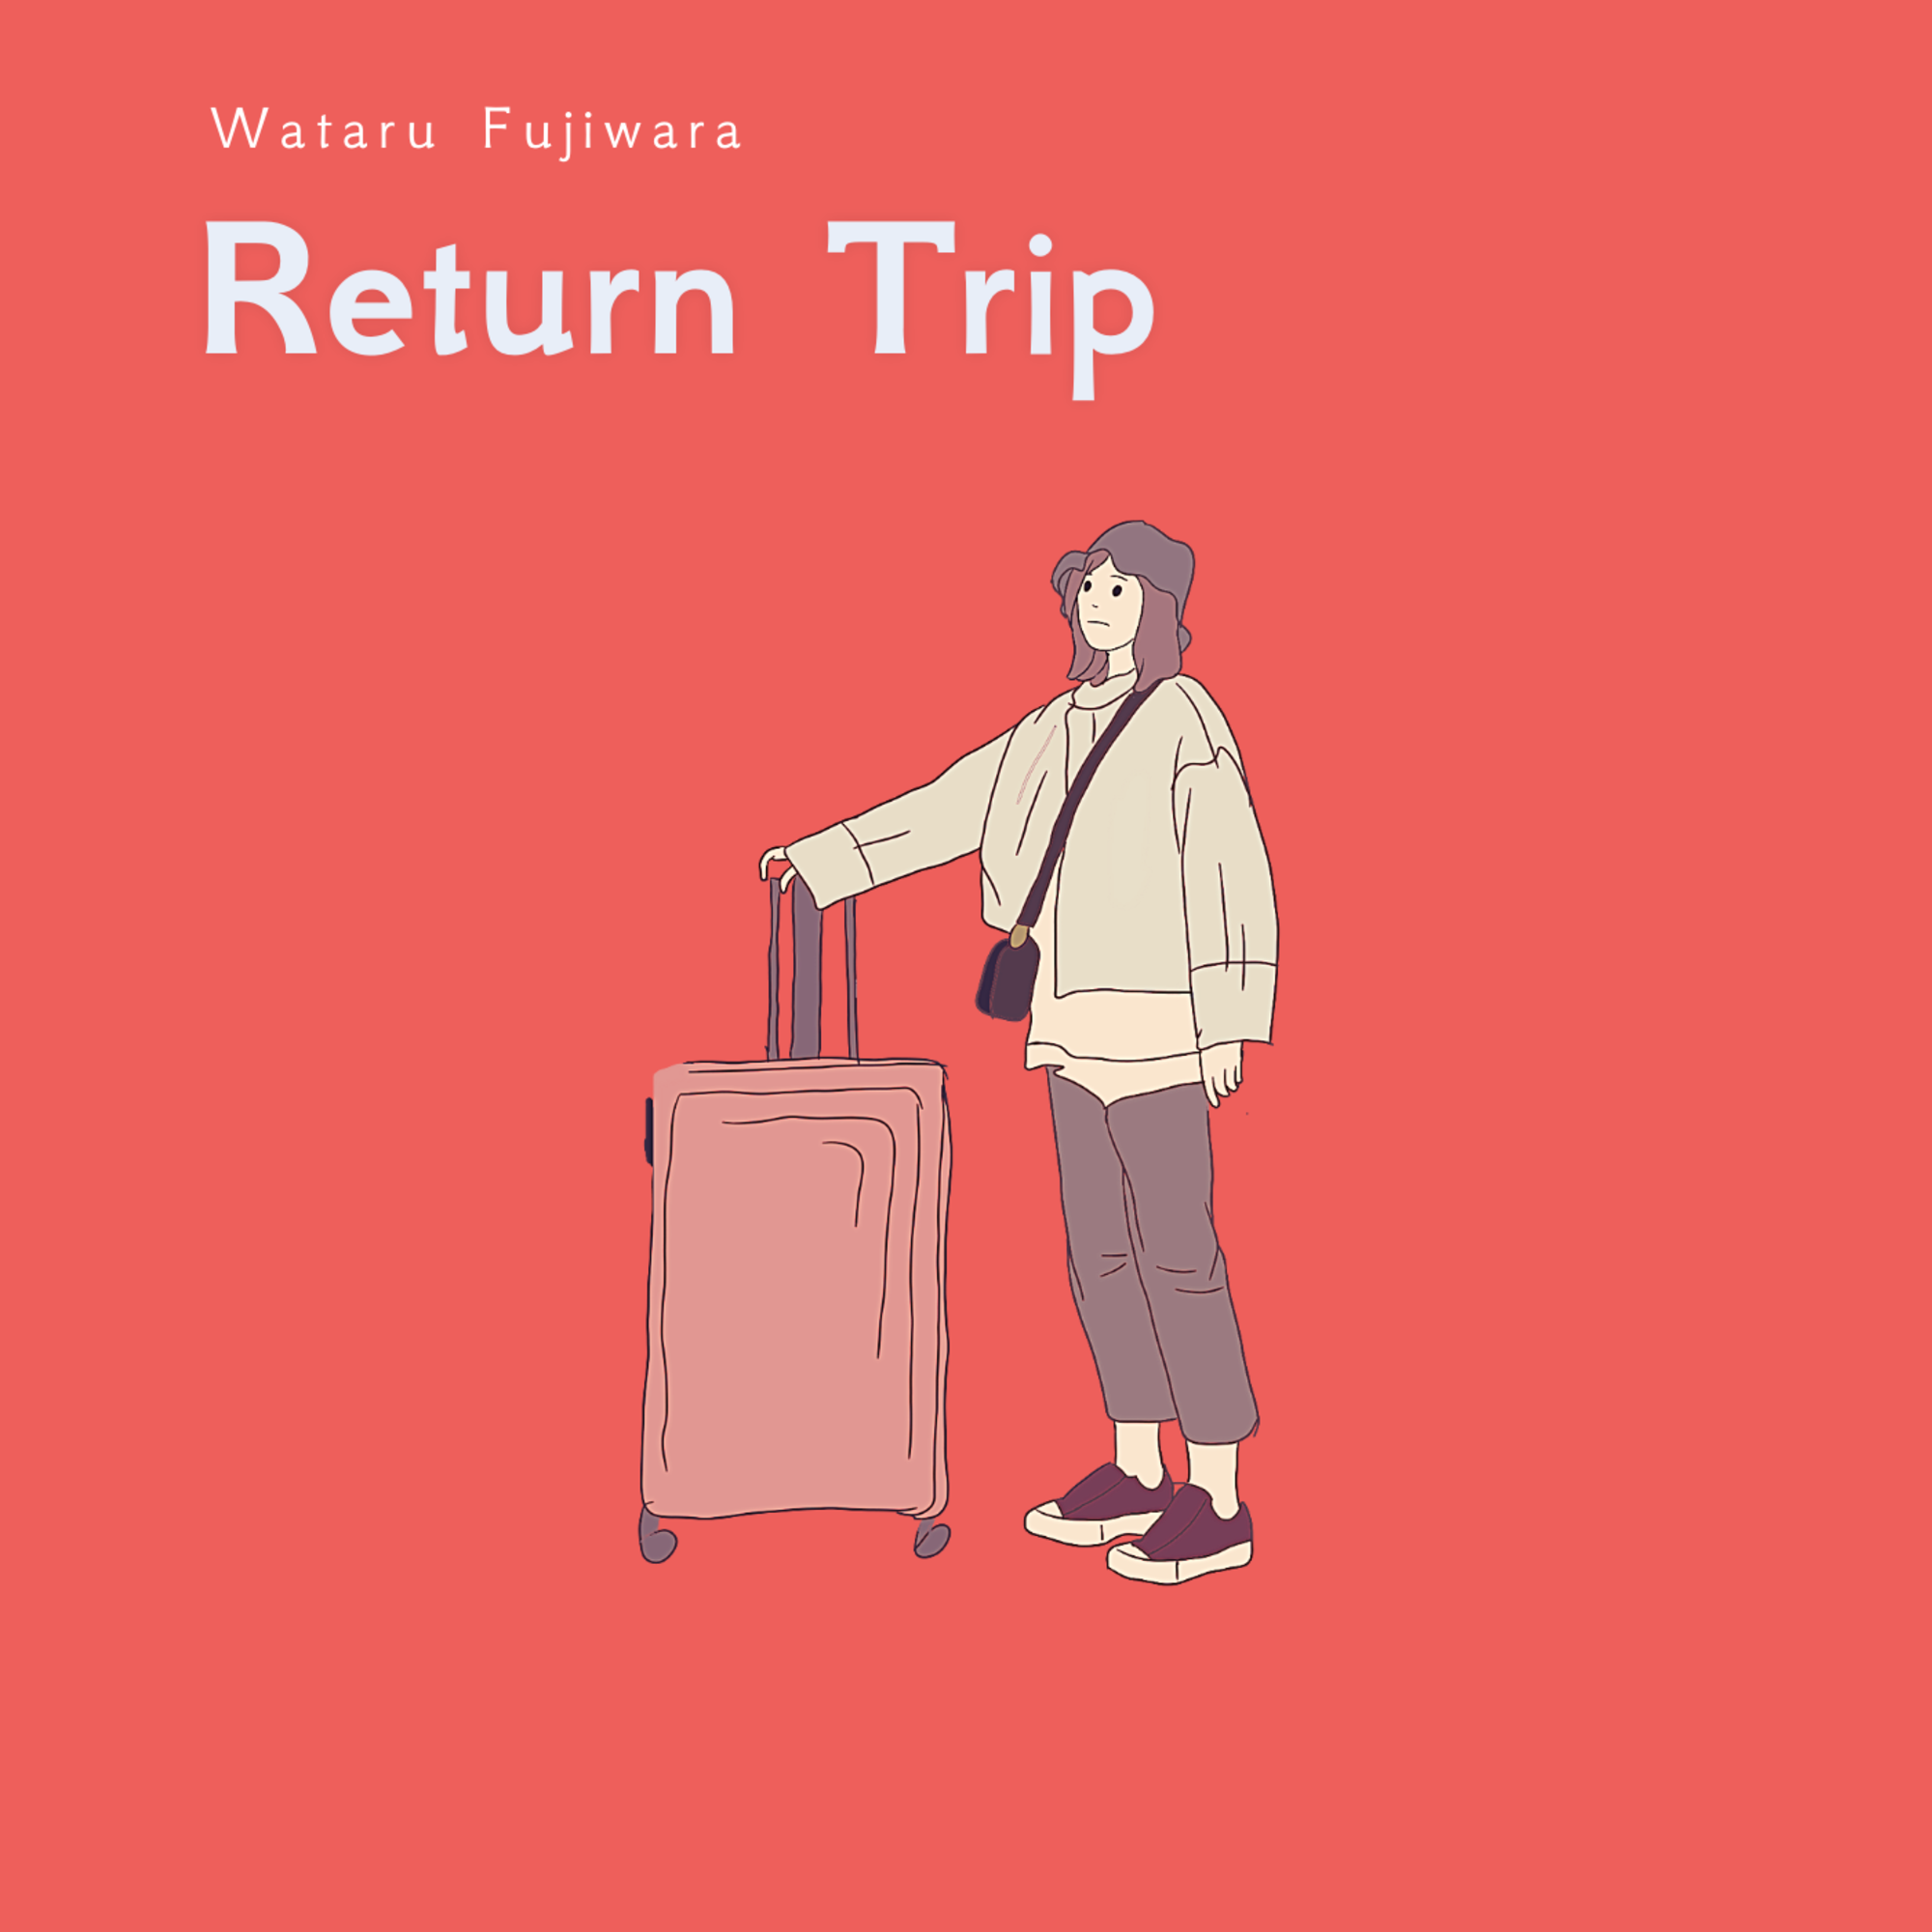 return trip to